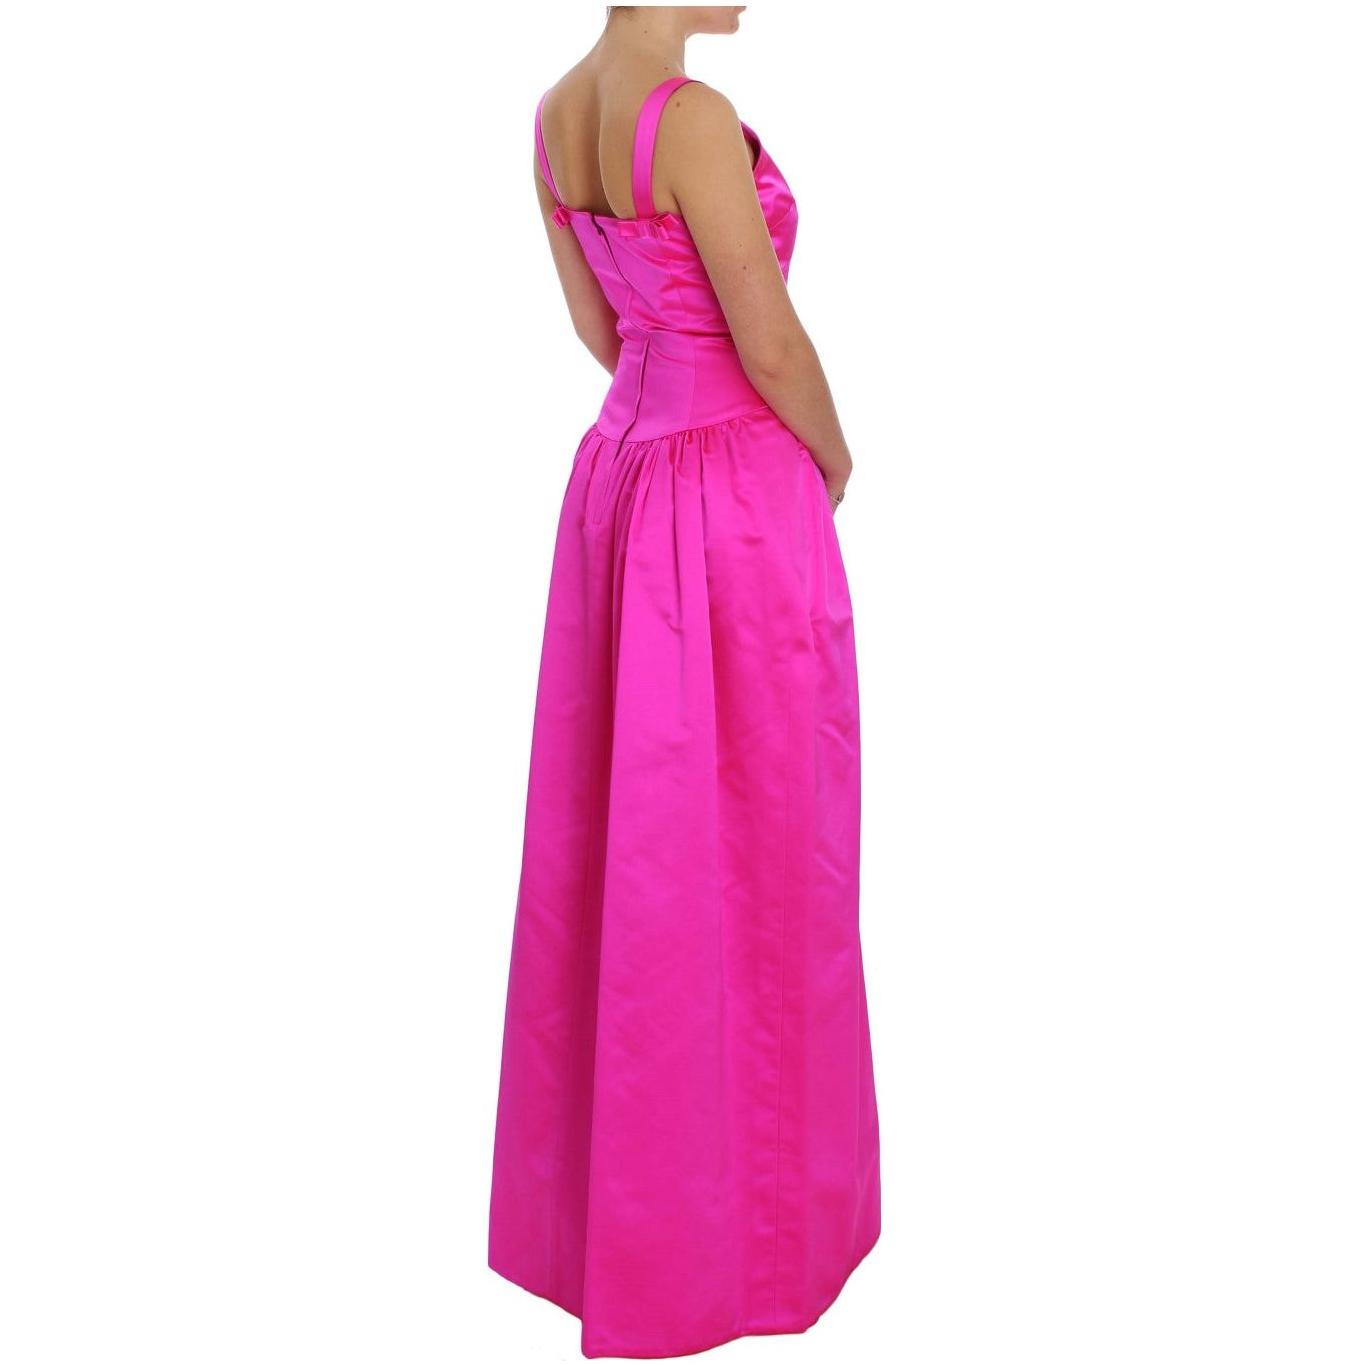 Dolce & Gabbana Elegant Silk Full Length Pink Sheath Dress pink-silk-long-sheath-ball-gown-dress 76495-pink-silk-long-sheath-ball-gown-dress-3.jpg